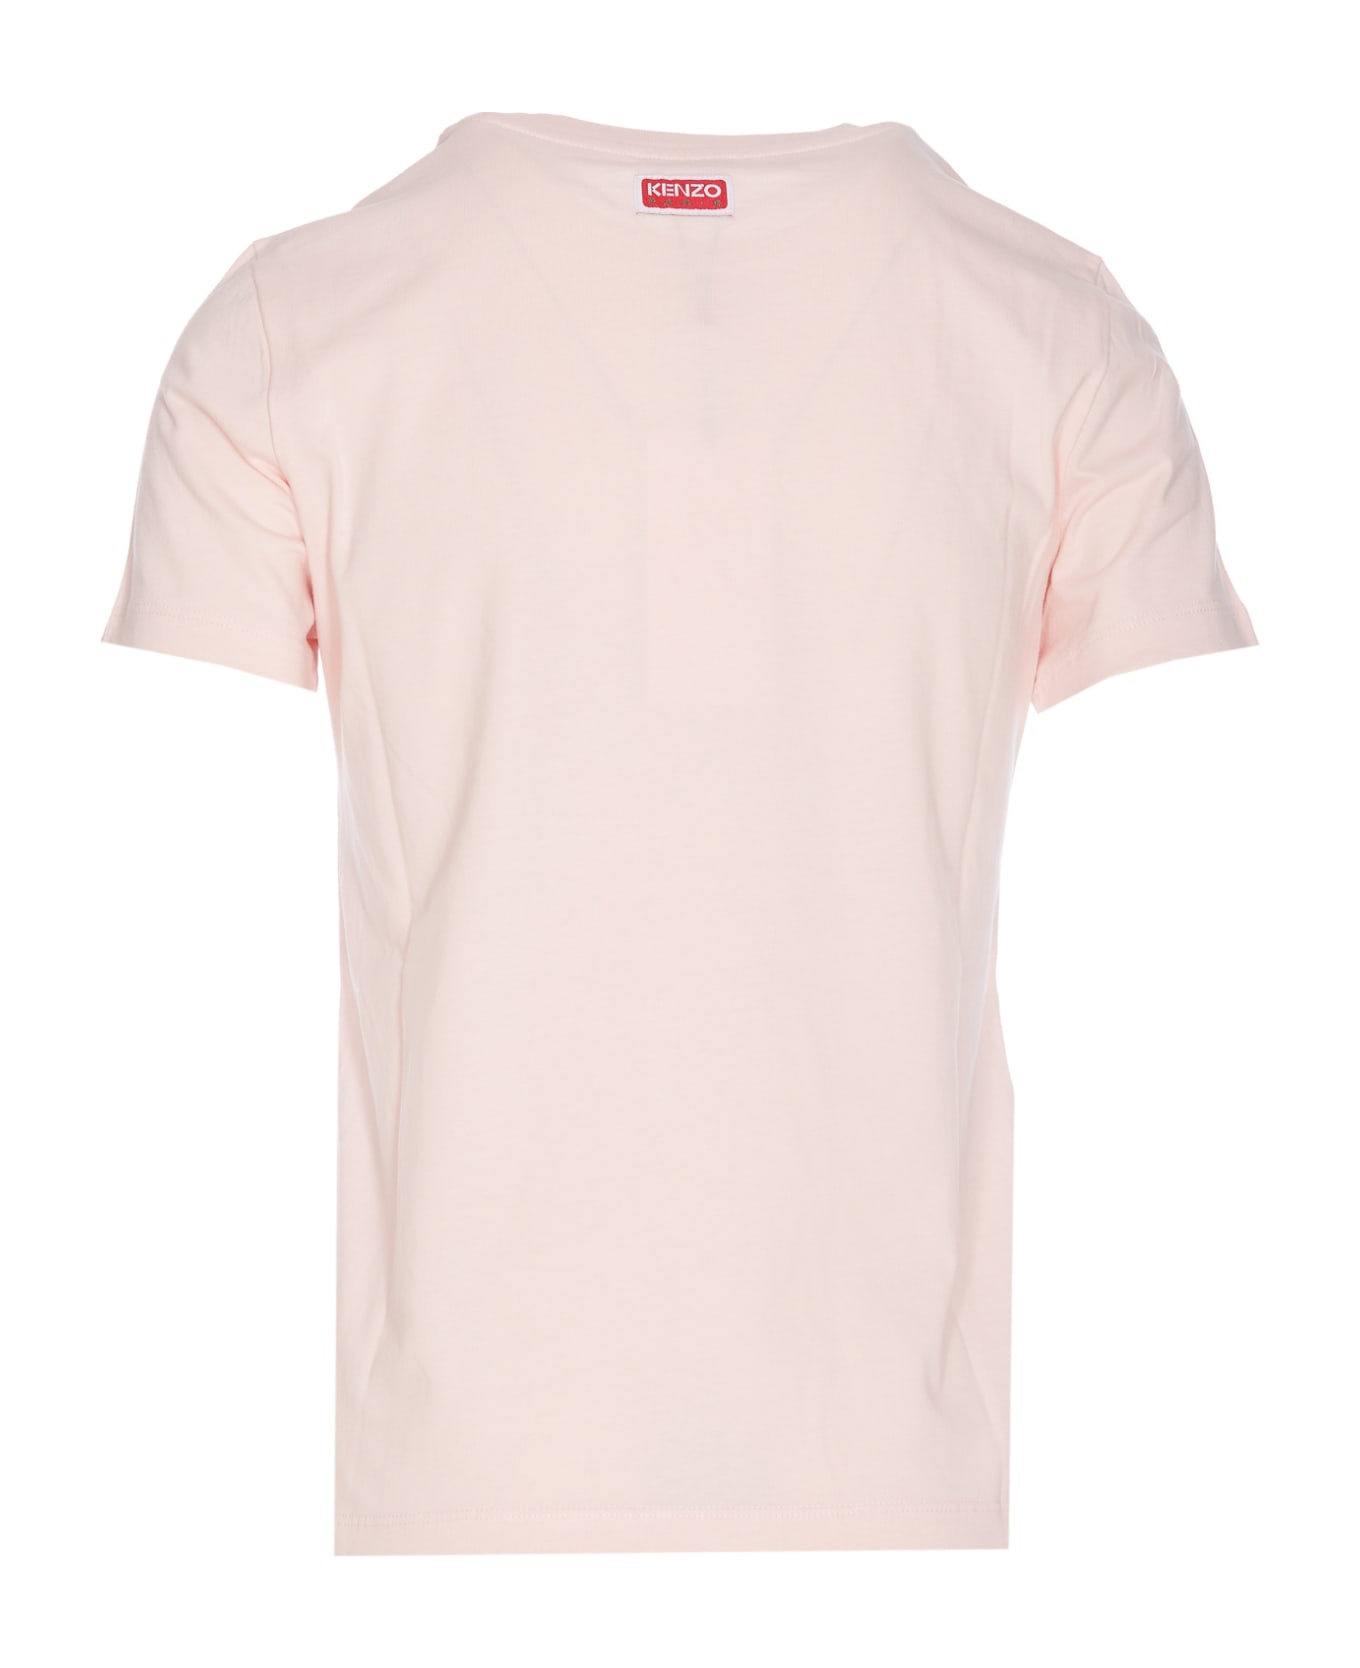 Kenzo Crest Elephant T-shirt - Pink